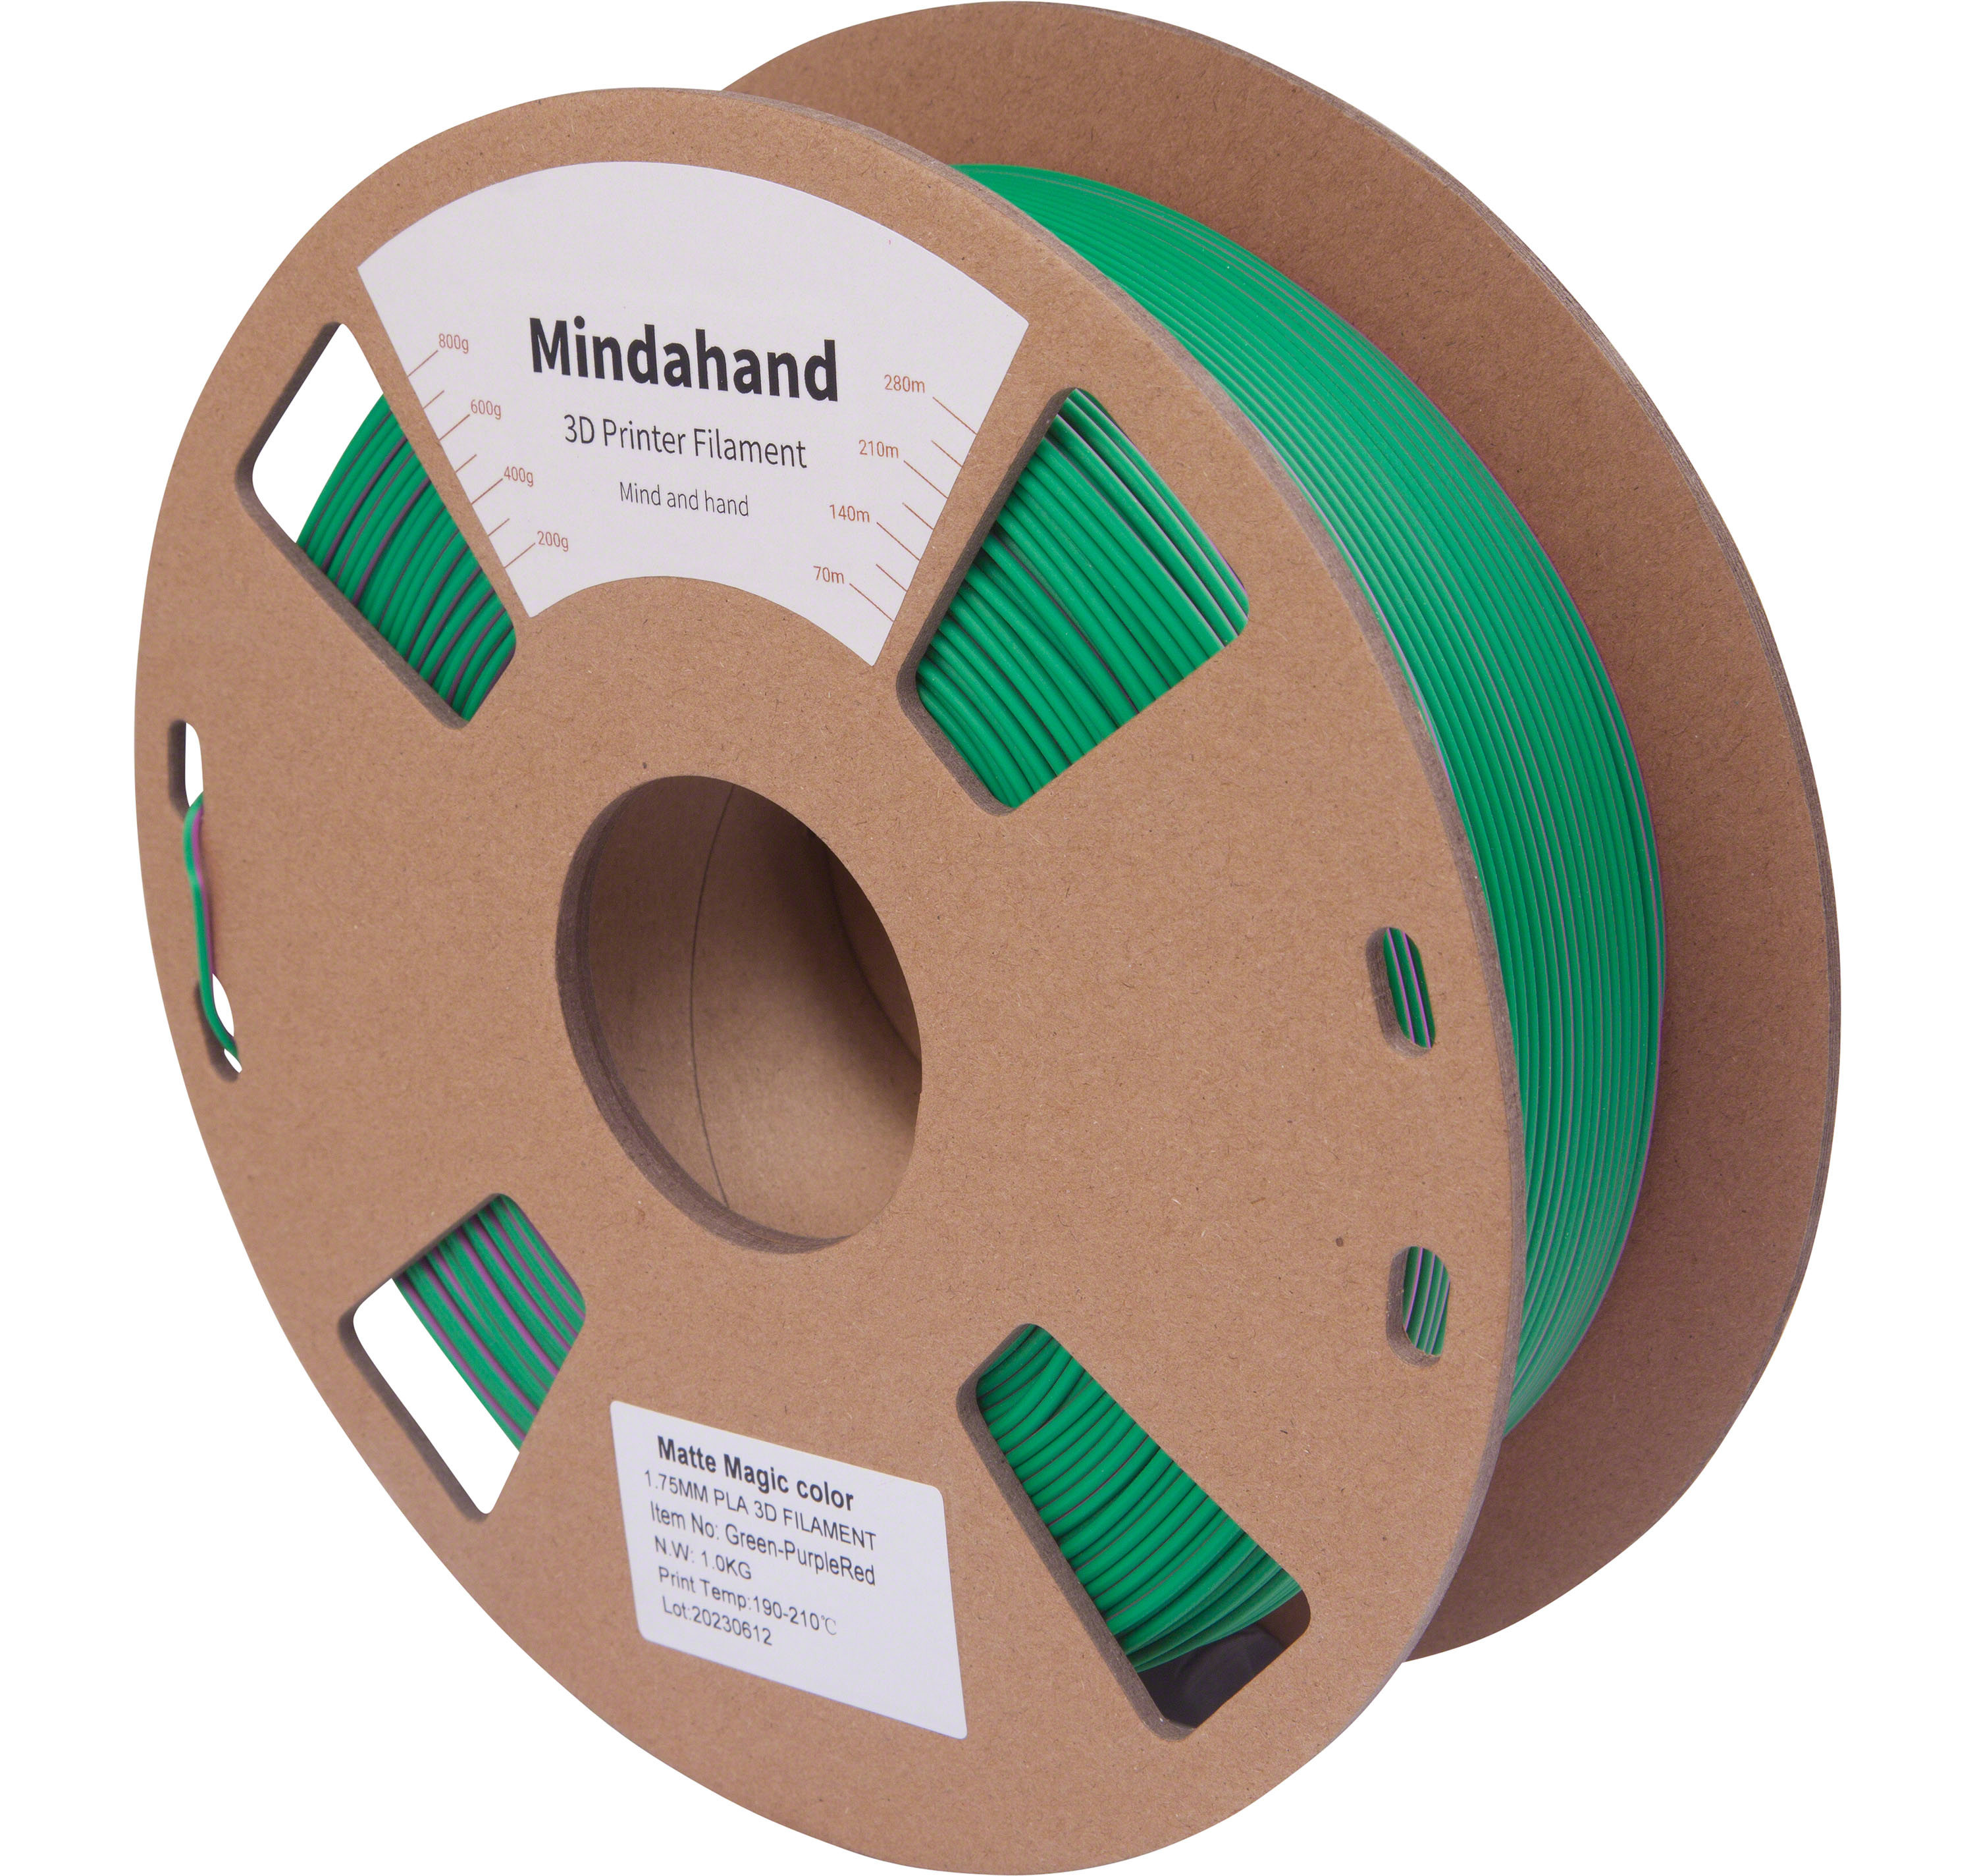 Mindahand Filament PLA Matte Multicolor Green-Purplered 1.75mm  M01122053.1-31 - 3DWare Shop Schweiz